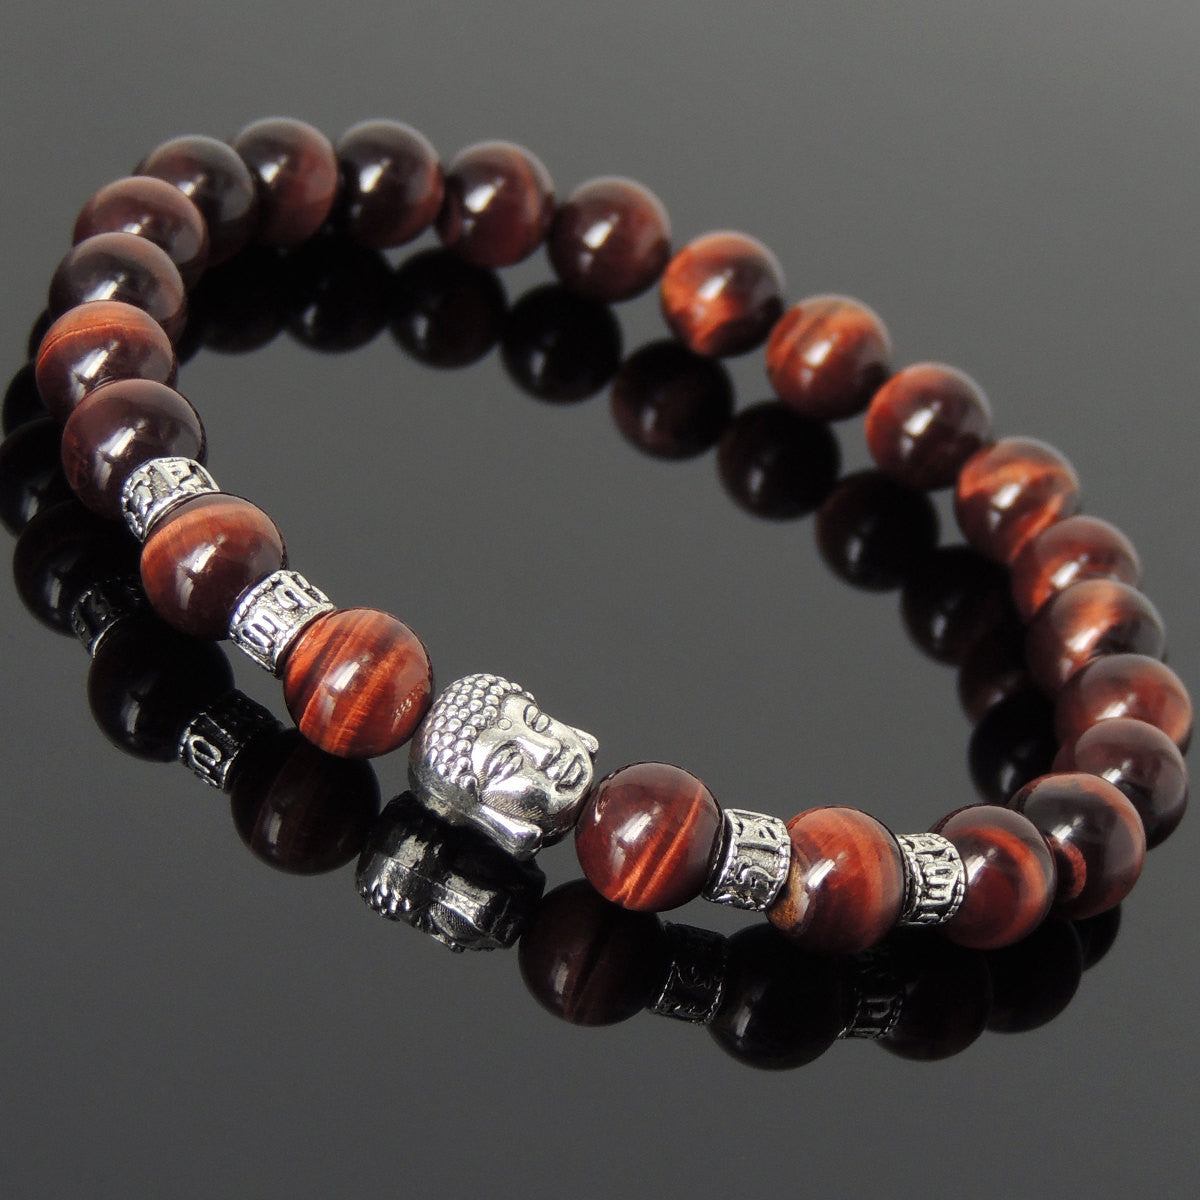 Red Tiger Eye Healing Gemstone Bracelet with Tibetan Silver Guanyin Buddha & OM Meditation Spacer Beads - Handmade by Gem & Silver TSB316